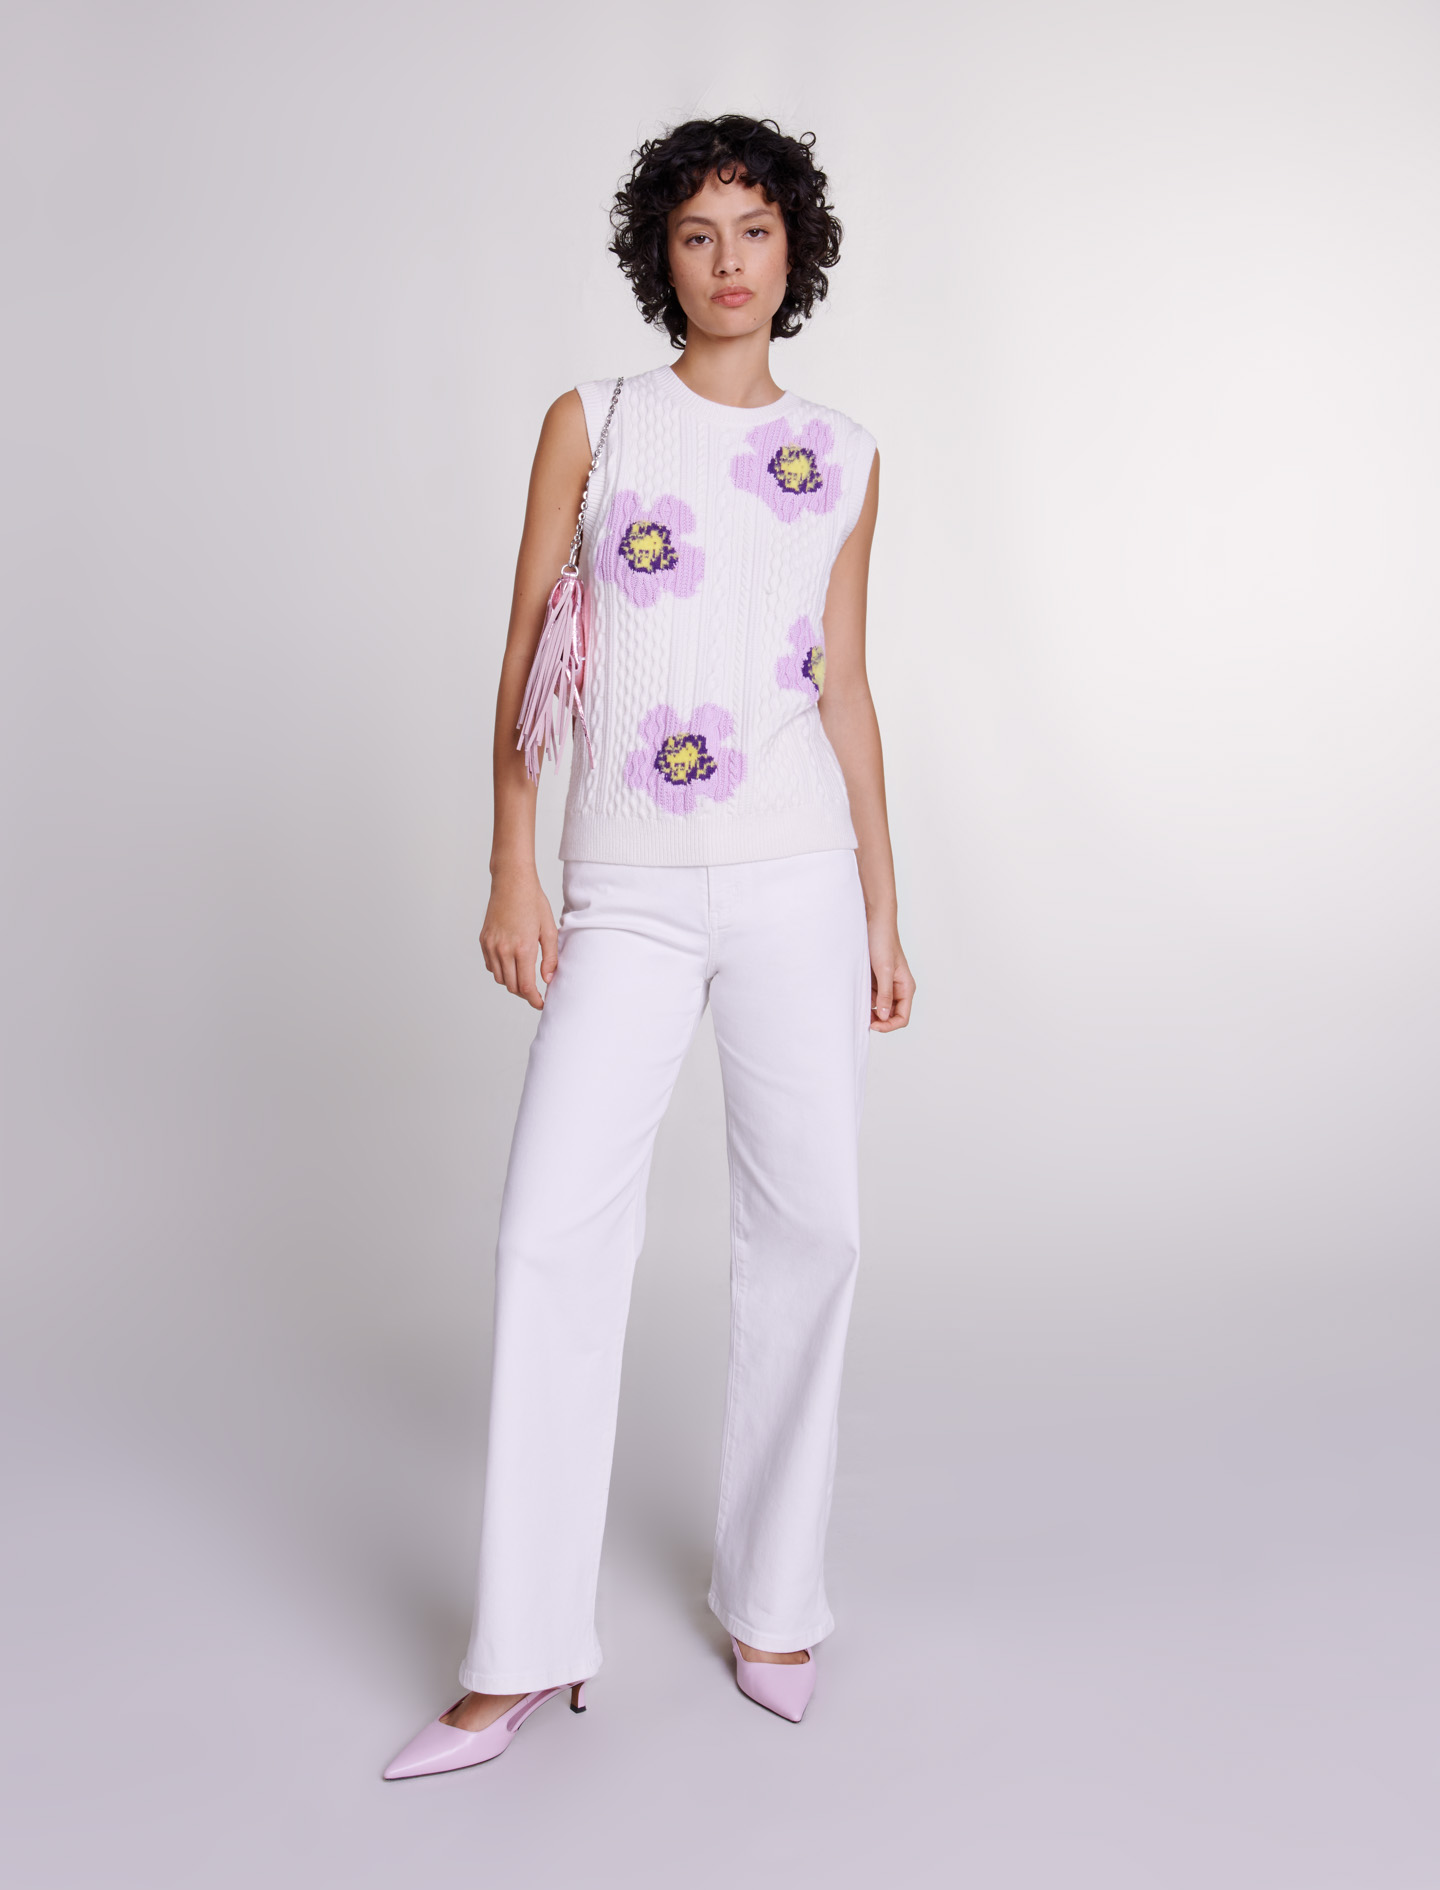 Maje Woman's viscose, Floral sleeveless jumper for Spring/Summer, in color Ecru / Beige